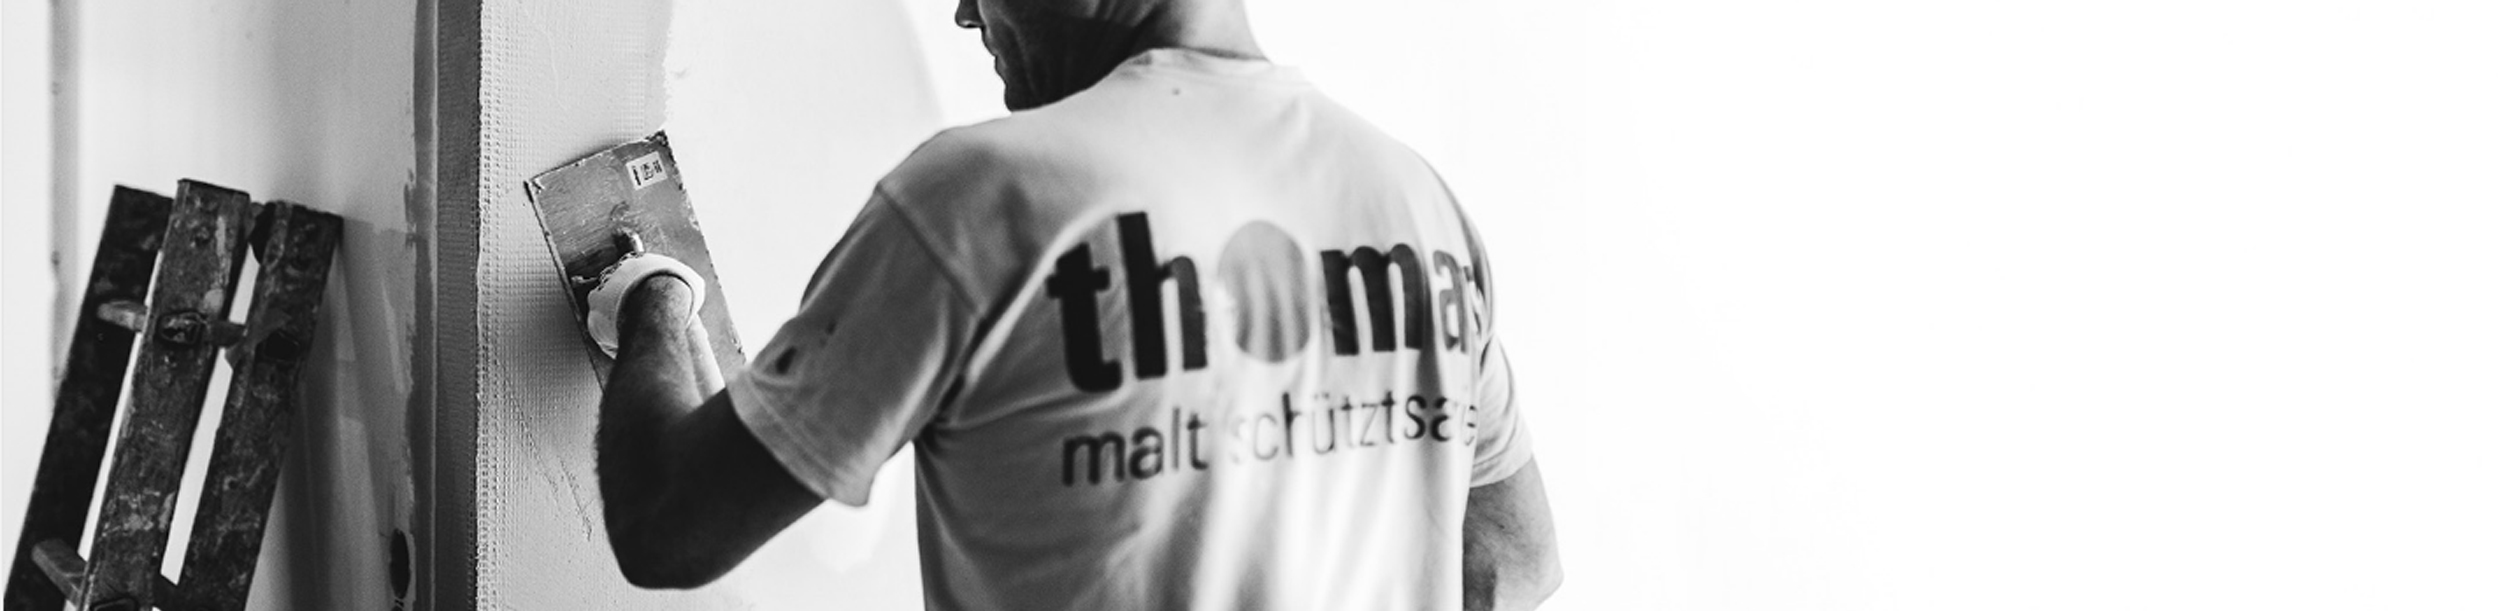 Leistungen Thomas GmbH